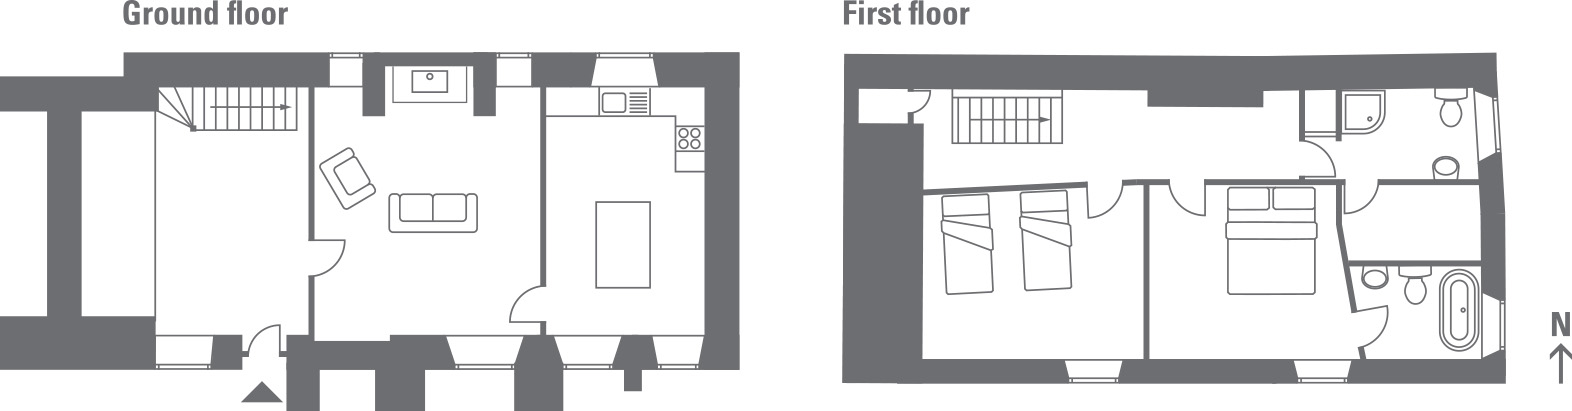 Floor plan of the Priest's House